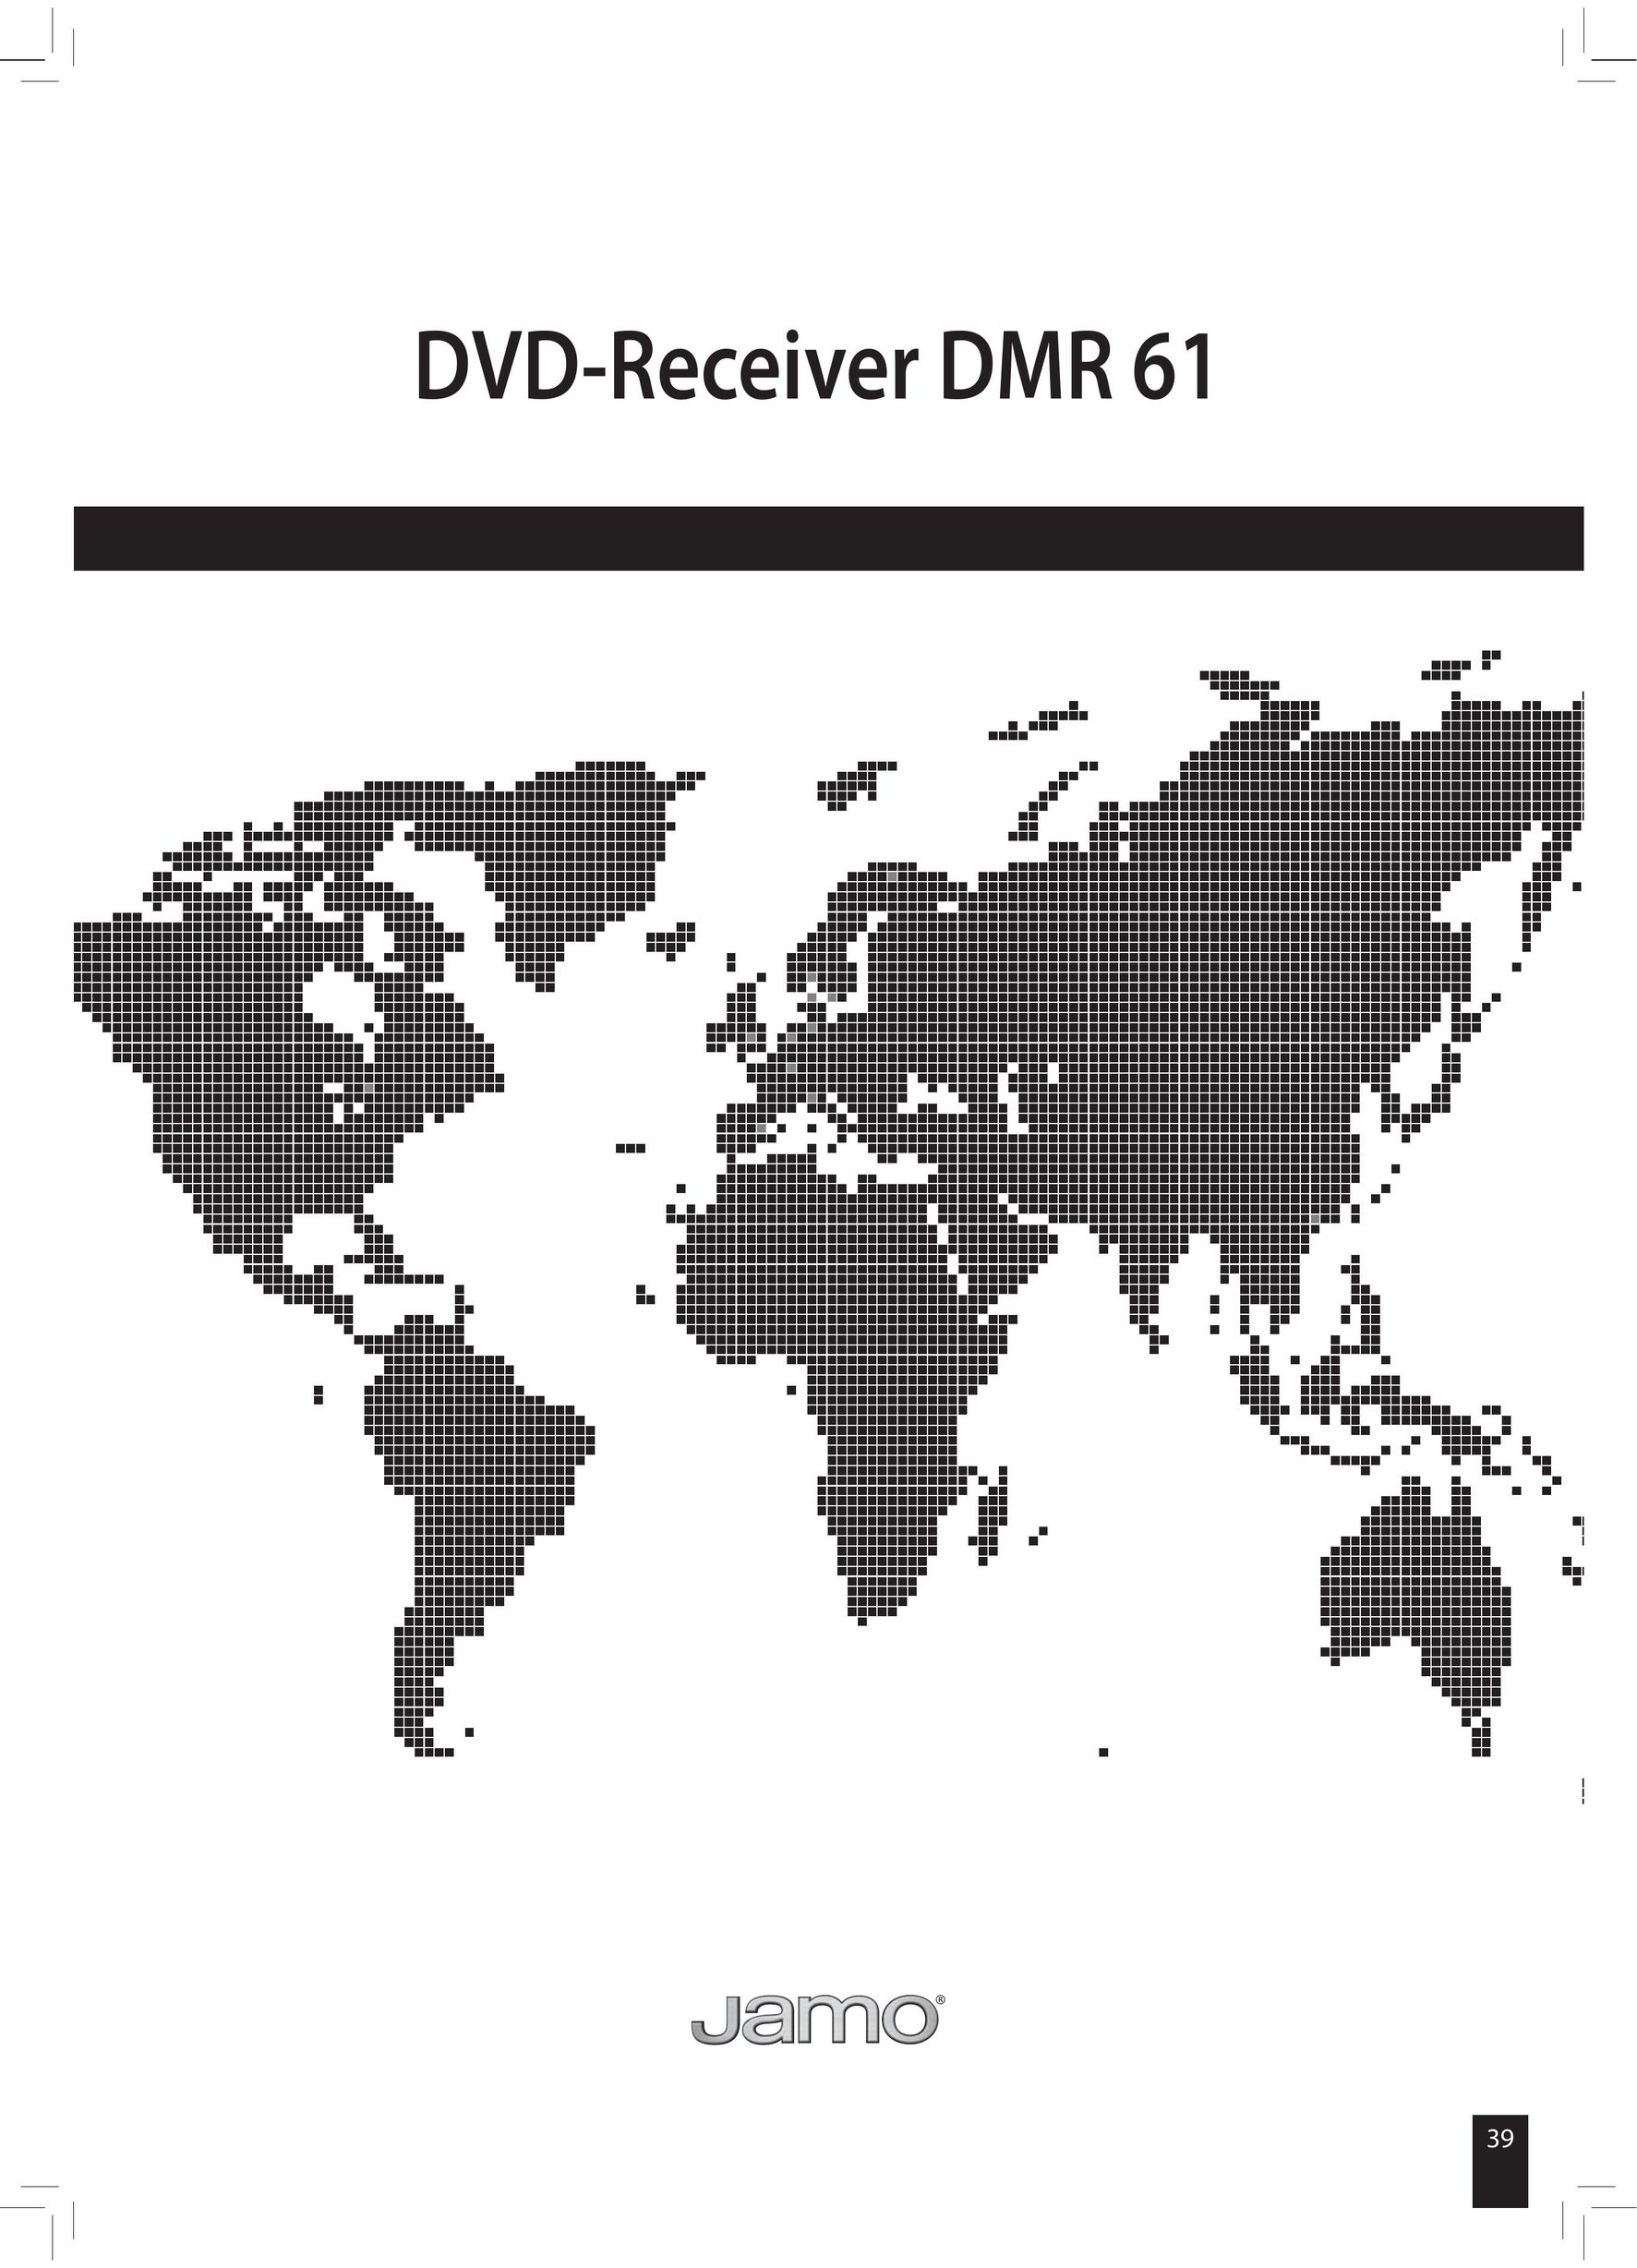 JAMO DMR 61 DVD Player User Manual